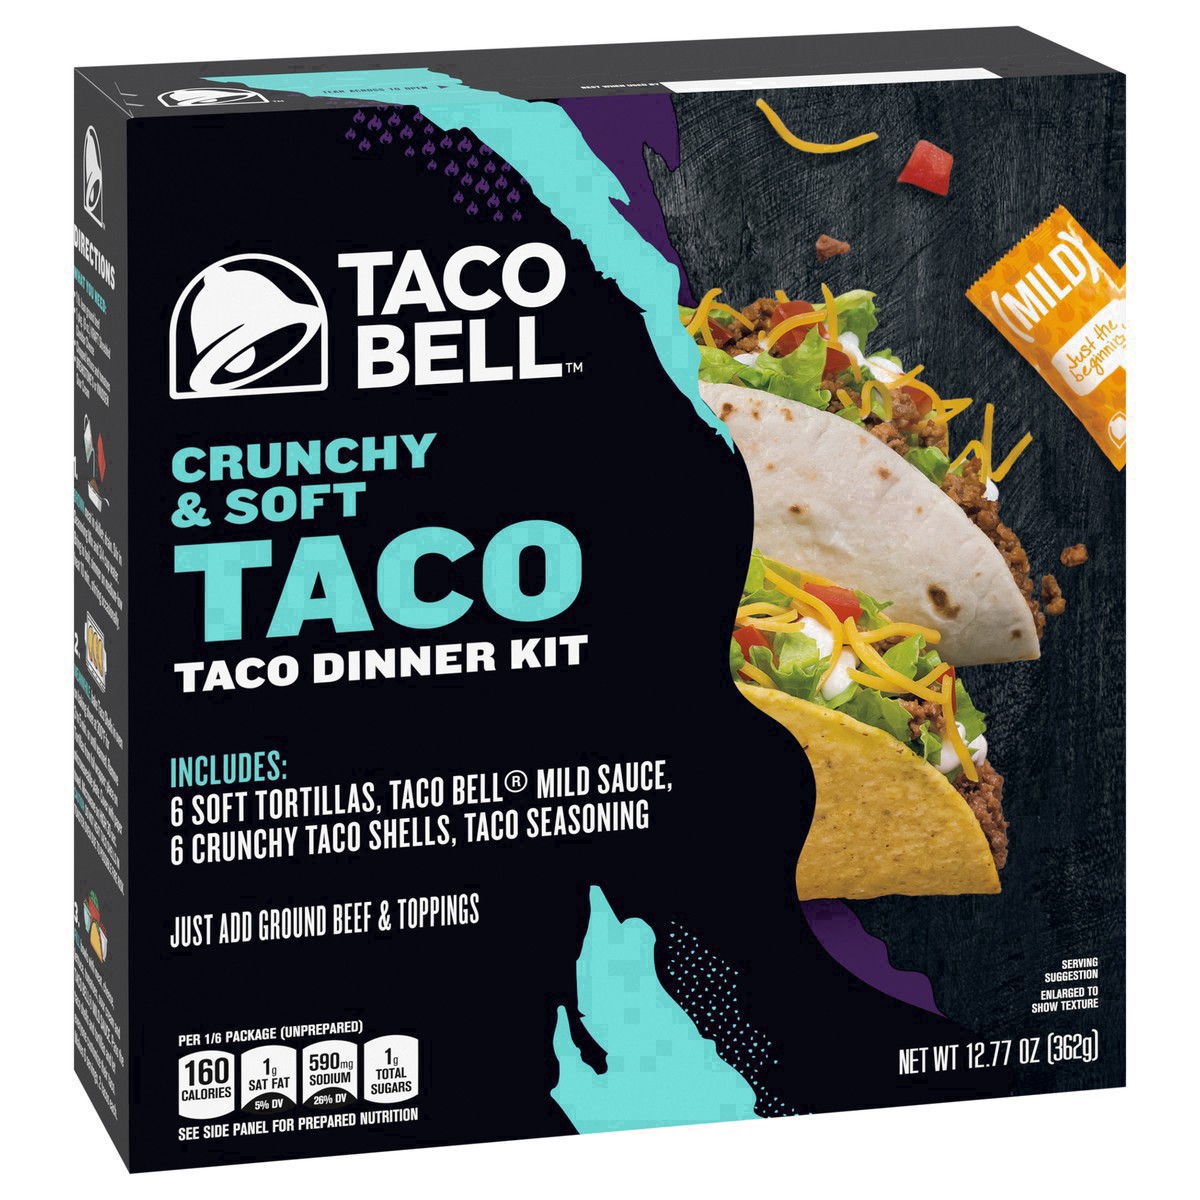 slide 91 of 101, Taco Bell Crunchy & Soft Taco Cravings Kit with 6 Soft Tortillas, 6 Crunchy Taco Shells, Taco Bell Mild Sauce & Seasoning, 12.77 oz Box, 1 ct